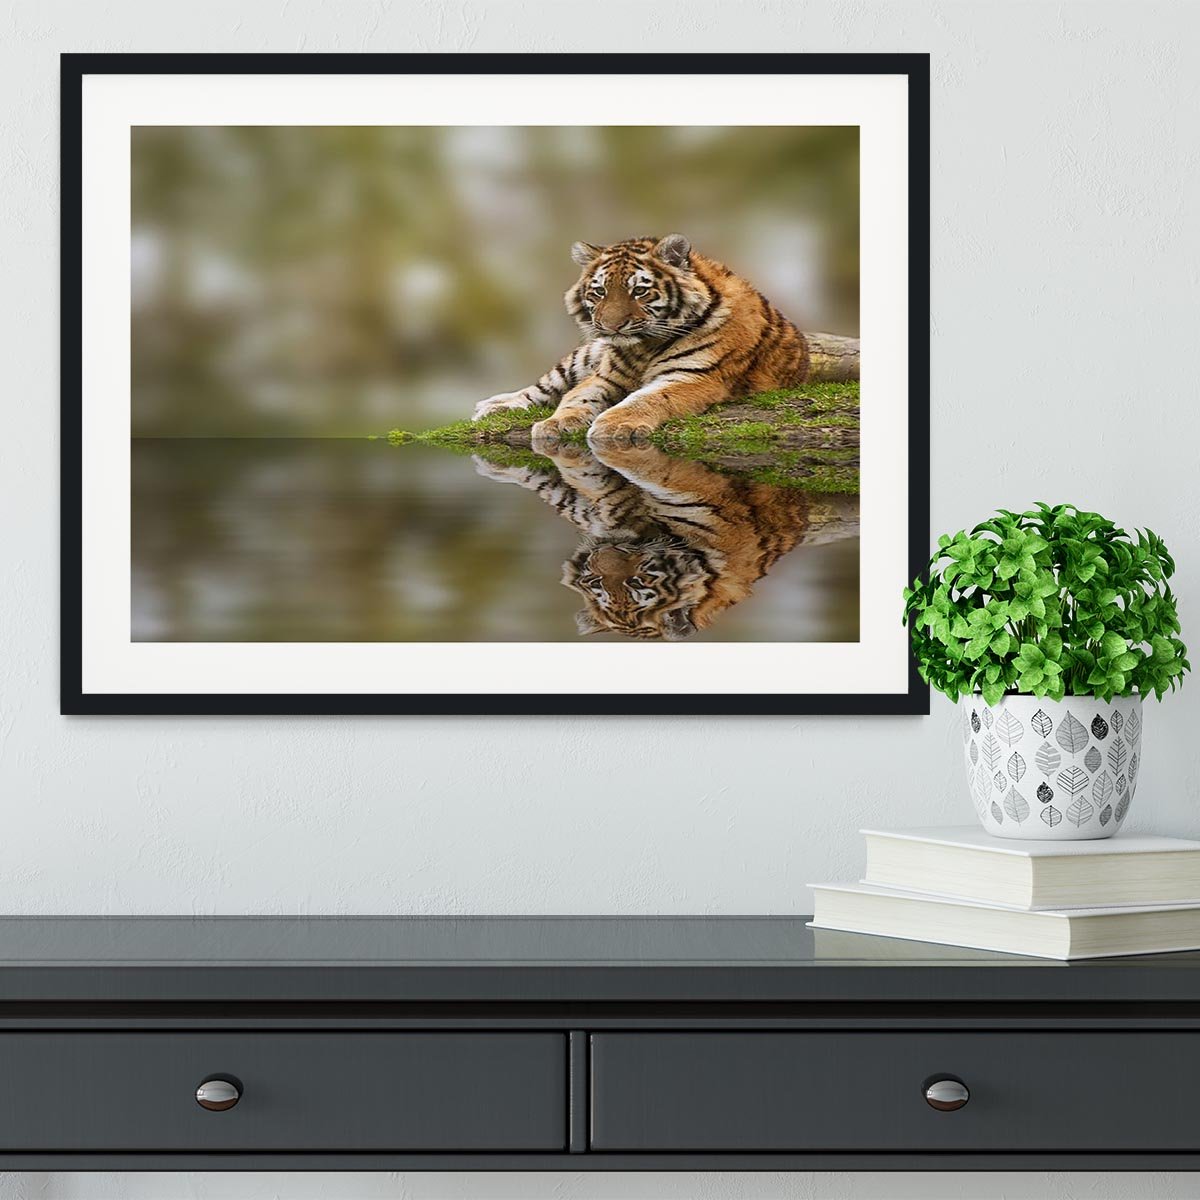 Sttunning tiger cub relaxing on a warm day Framed Print - Canvas Art Rocks - 1